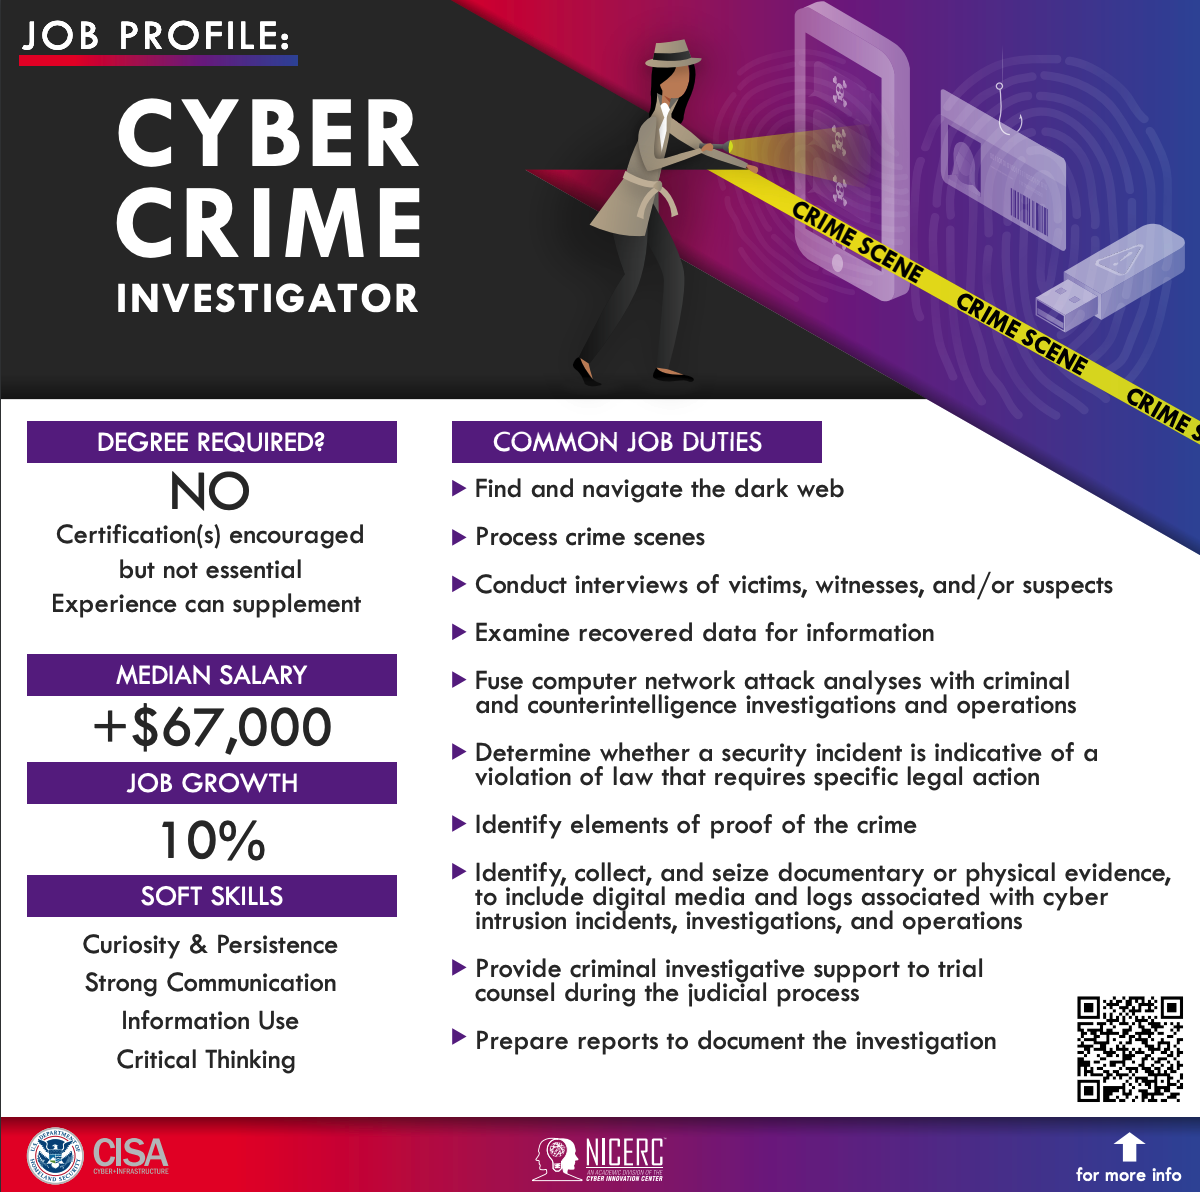 STEM Poster about Job Profile: Cyber Crime Investigator